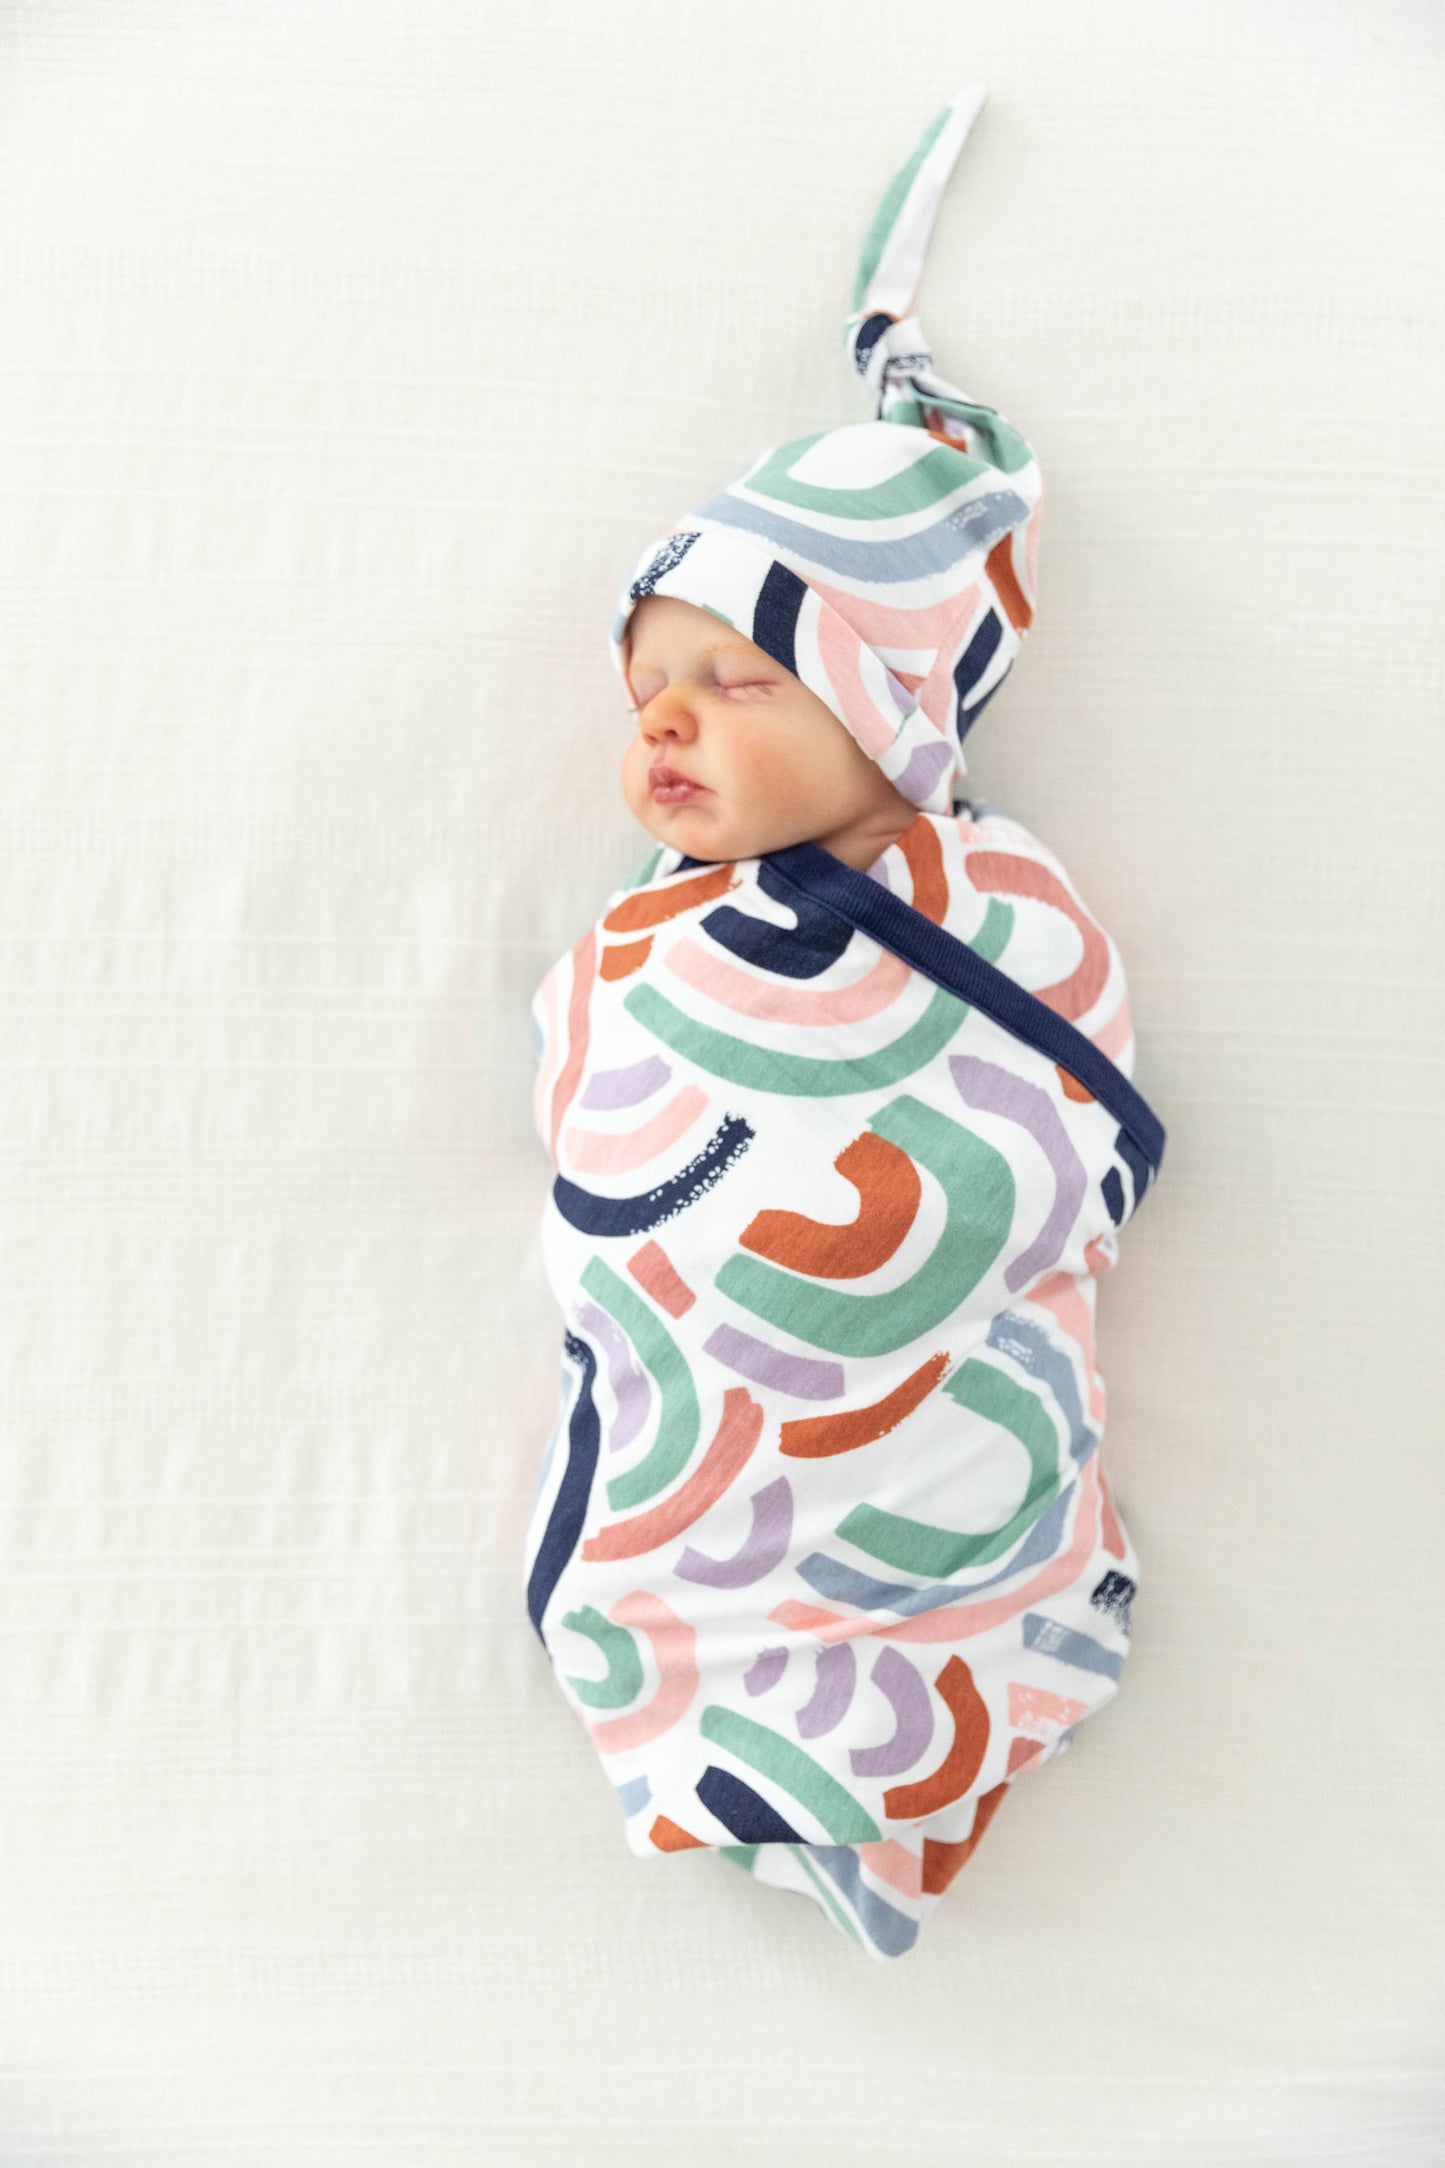 Sage Green Pregnancy/Postpartum Robe & Rainbow Baby Swaddle Blanket Set